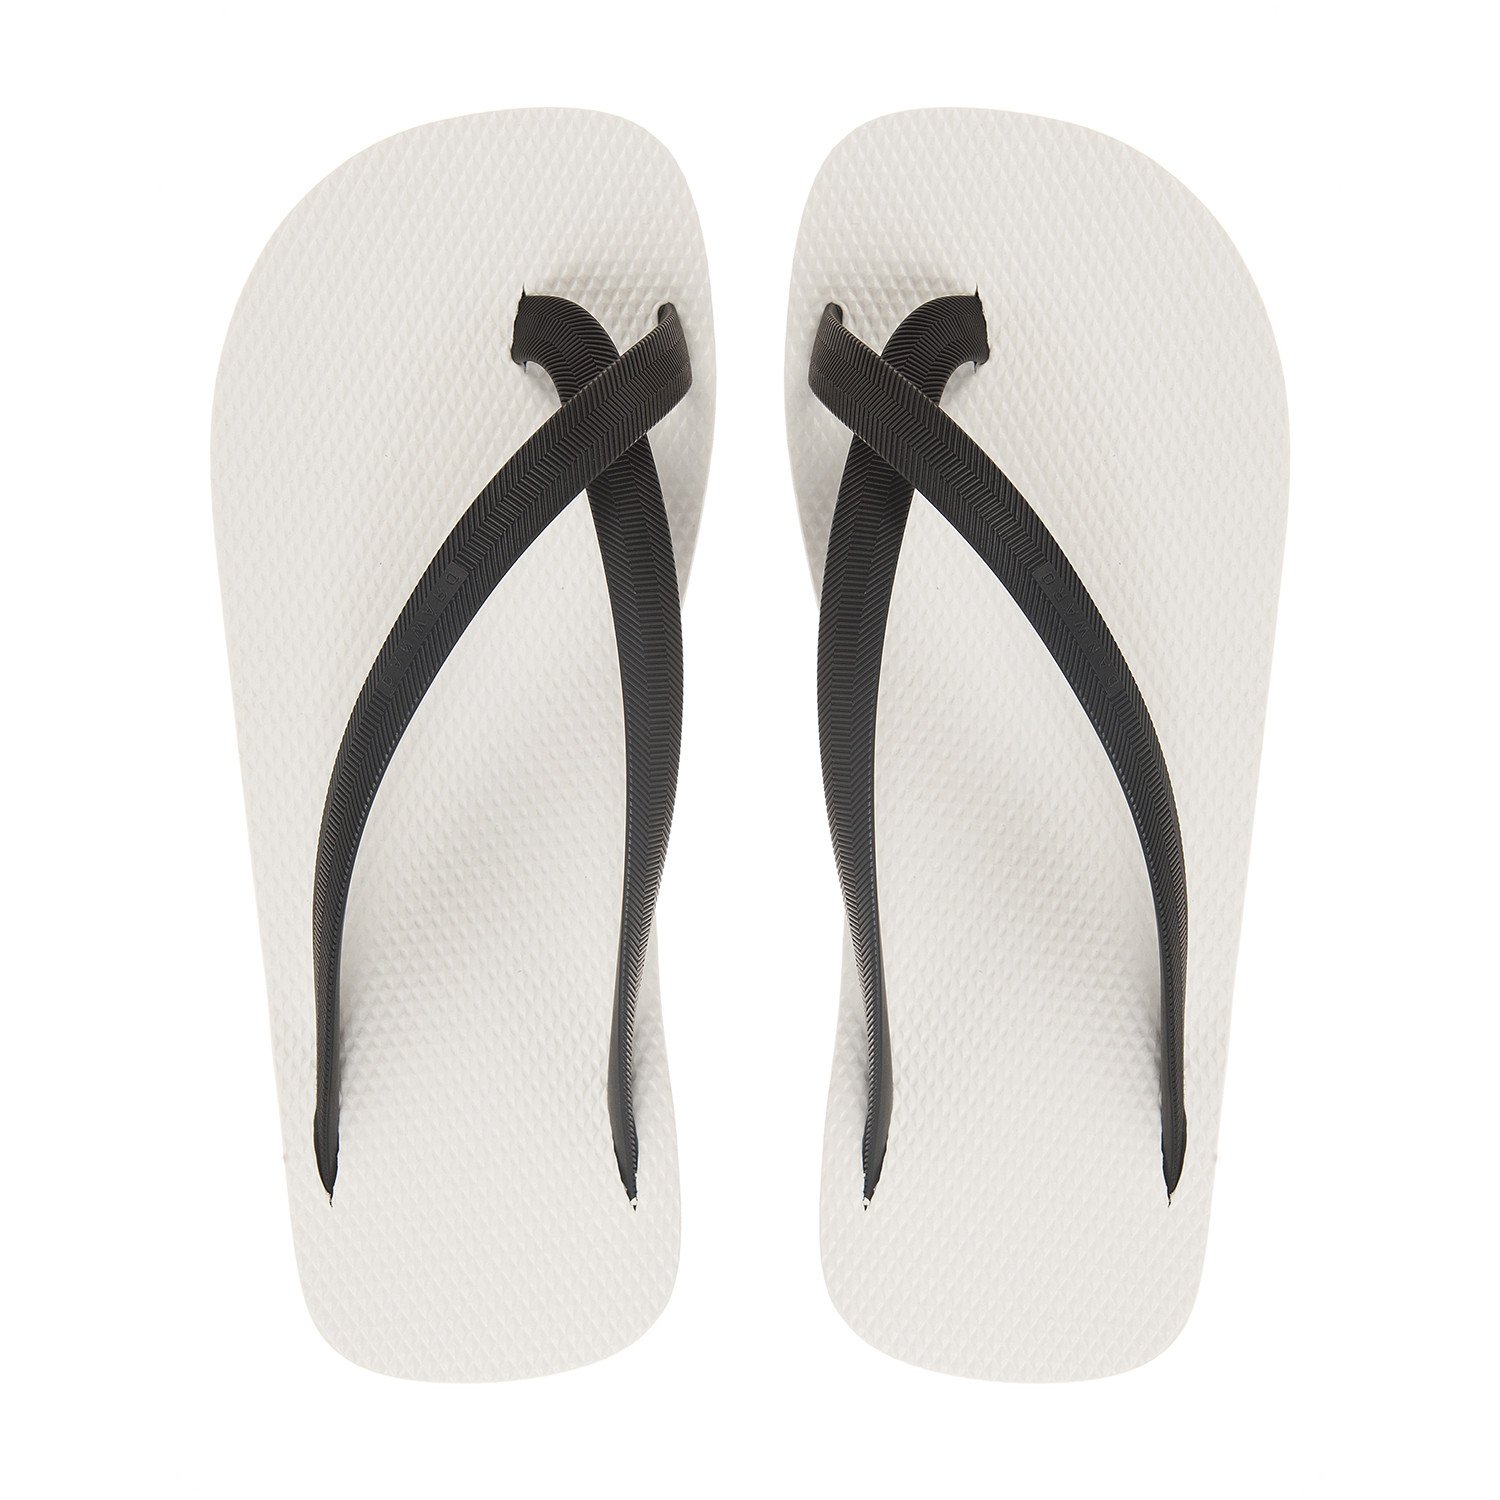 Danward Men's Cross Toe Flip-Flop Sandals CM15FFF1 $78 NEW | eBay